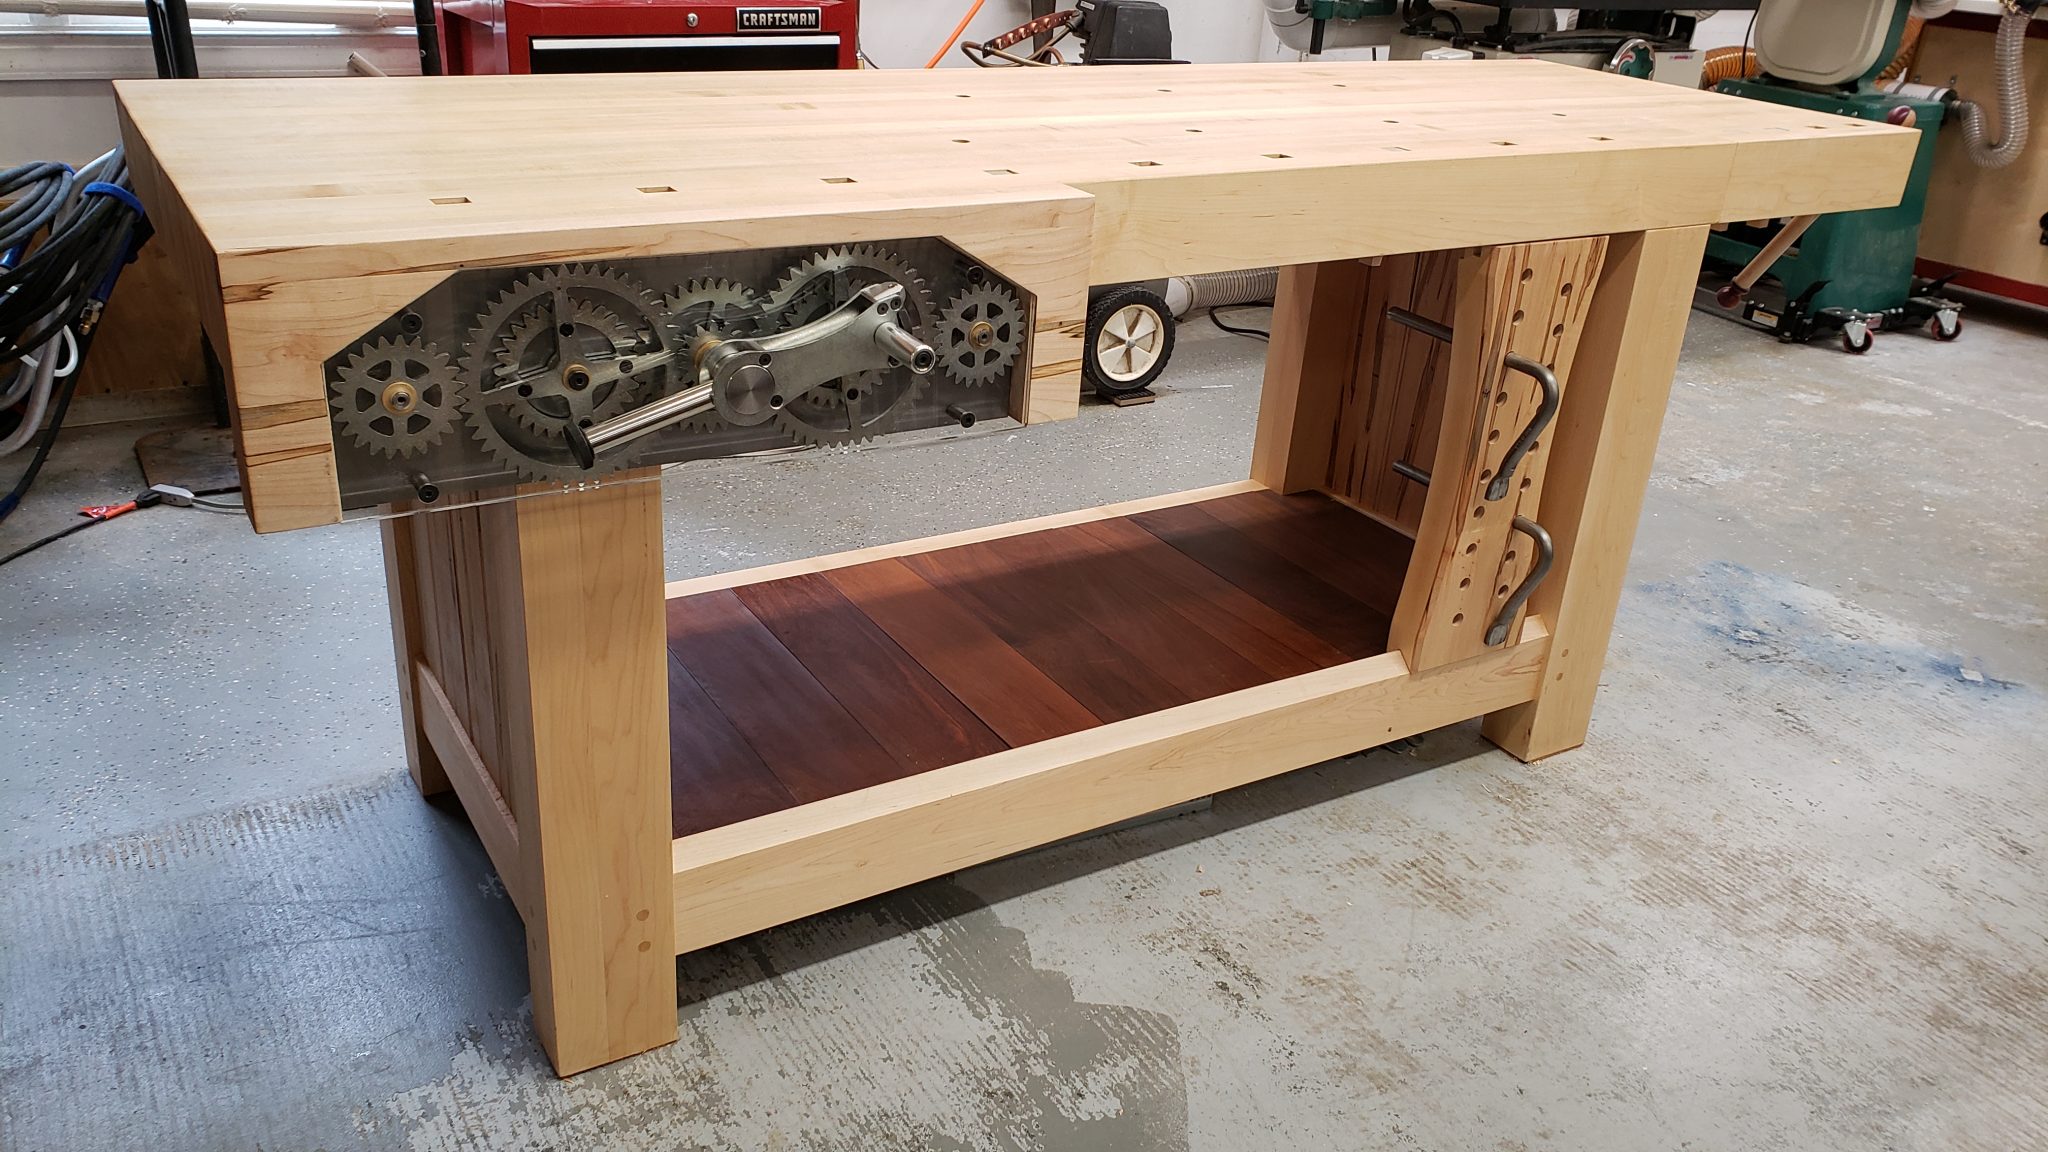 Woodworking workbench, solid hard Maple with Ambrosia Maple trim, Ipe shelf